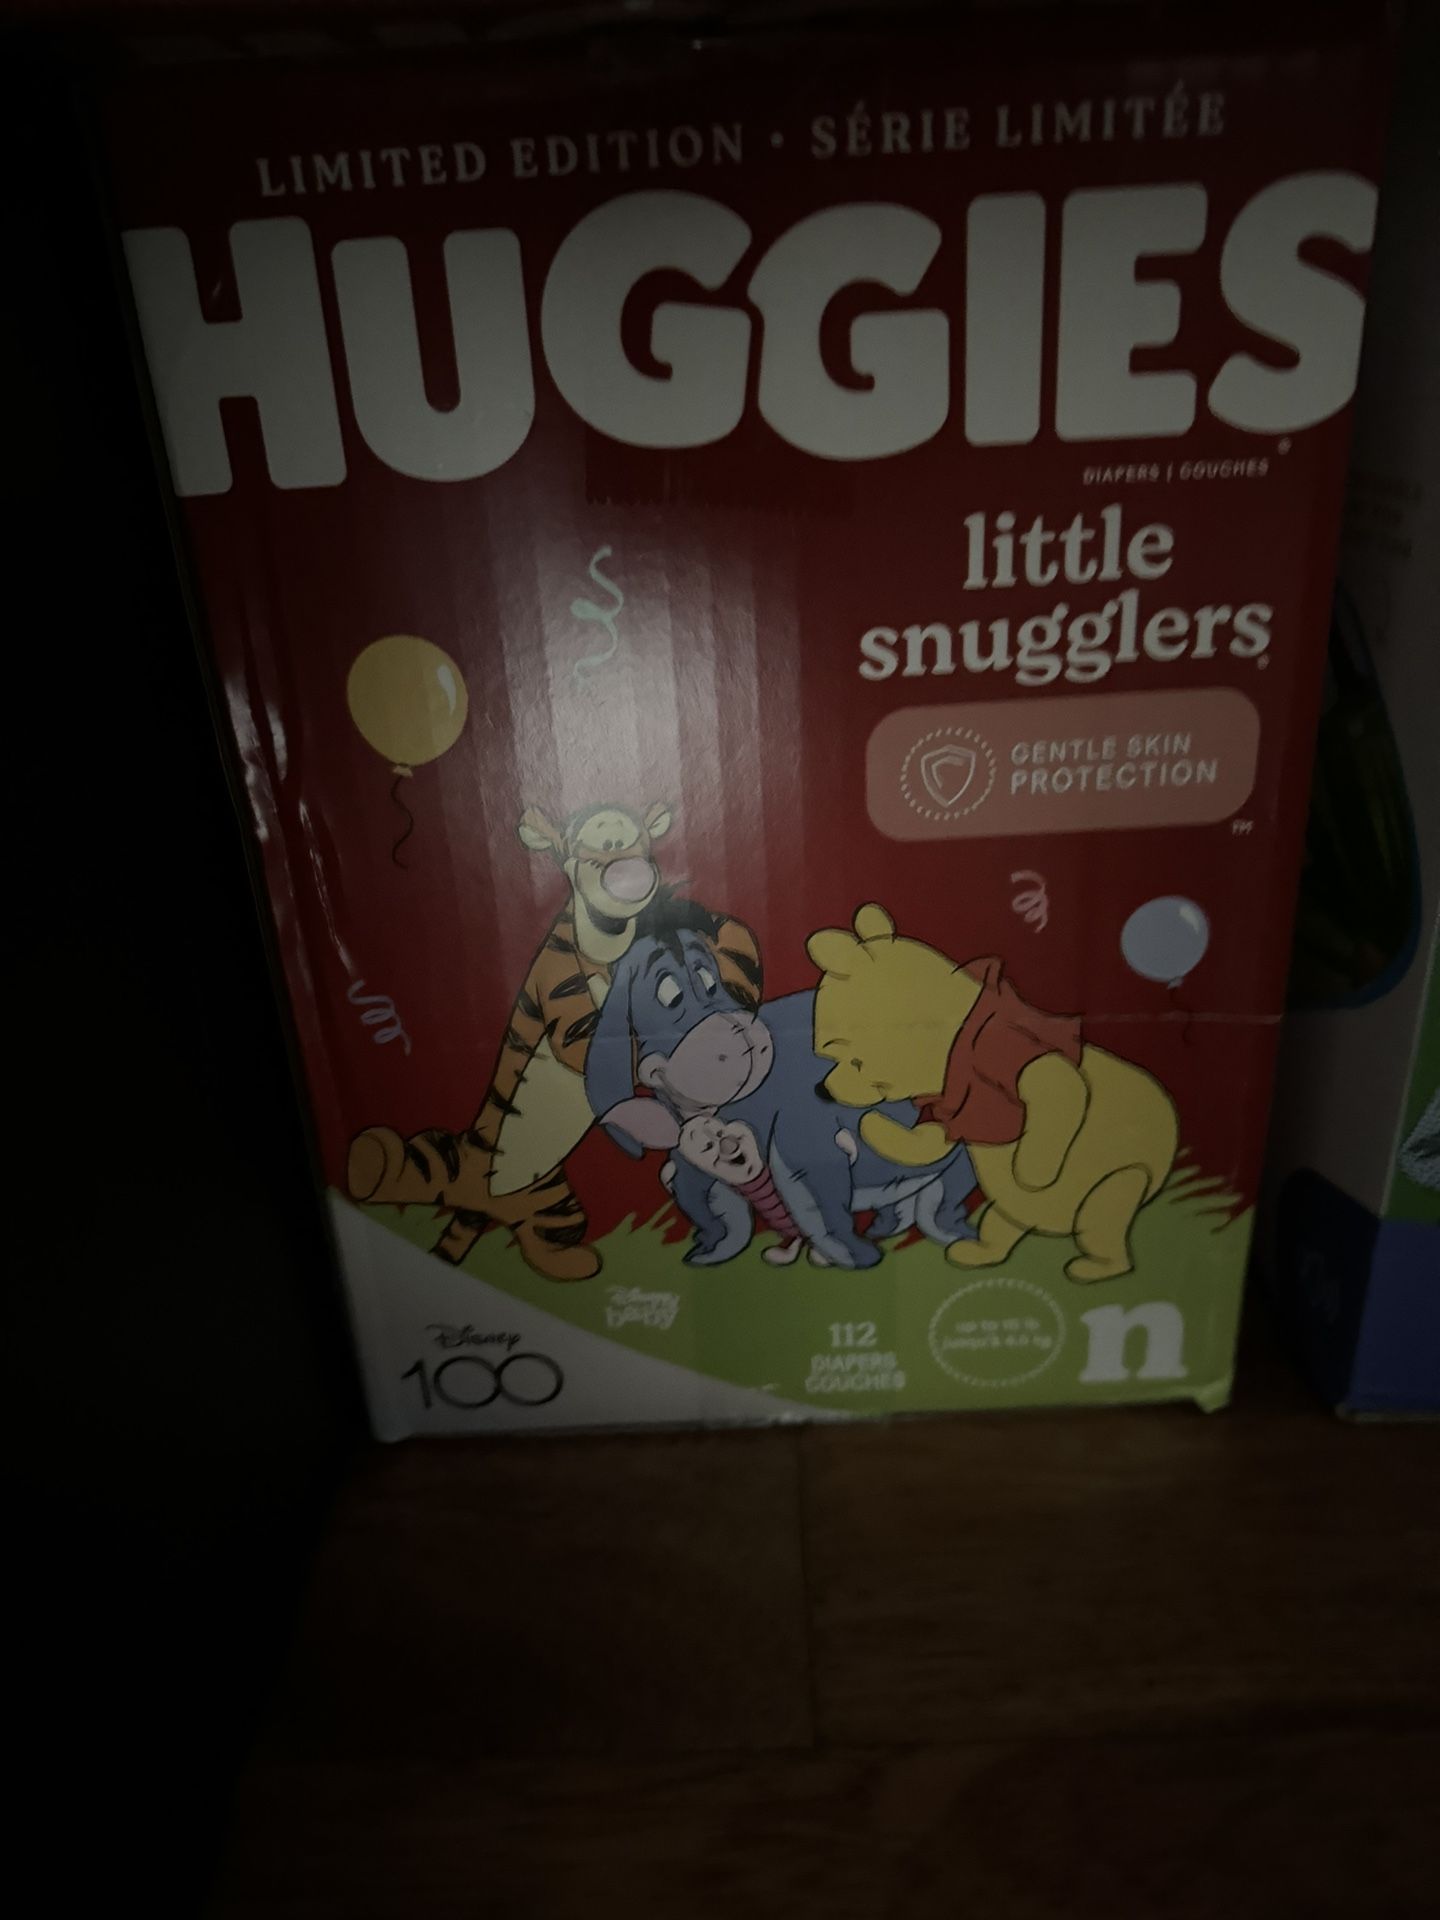 Huggies newborn